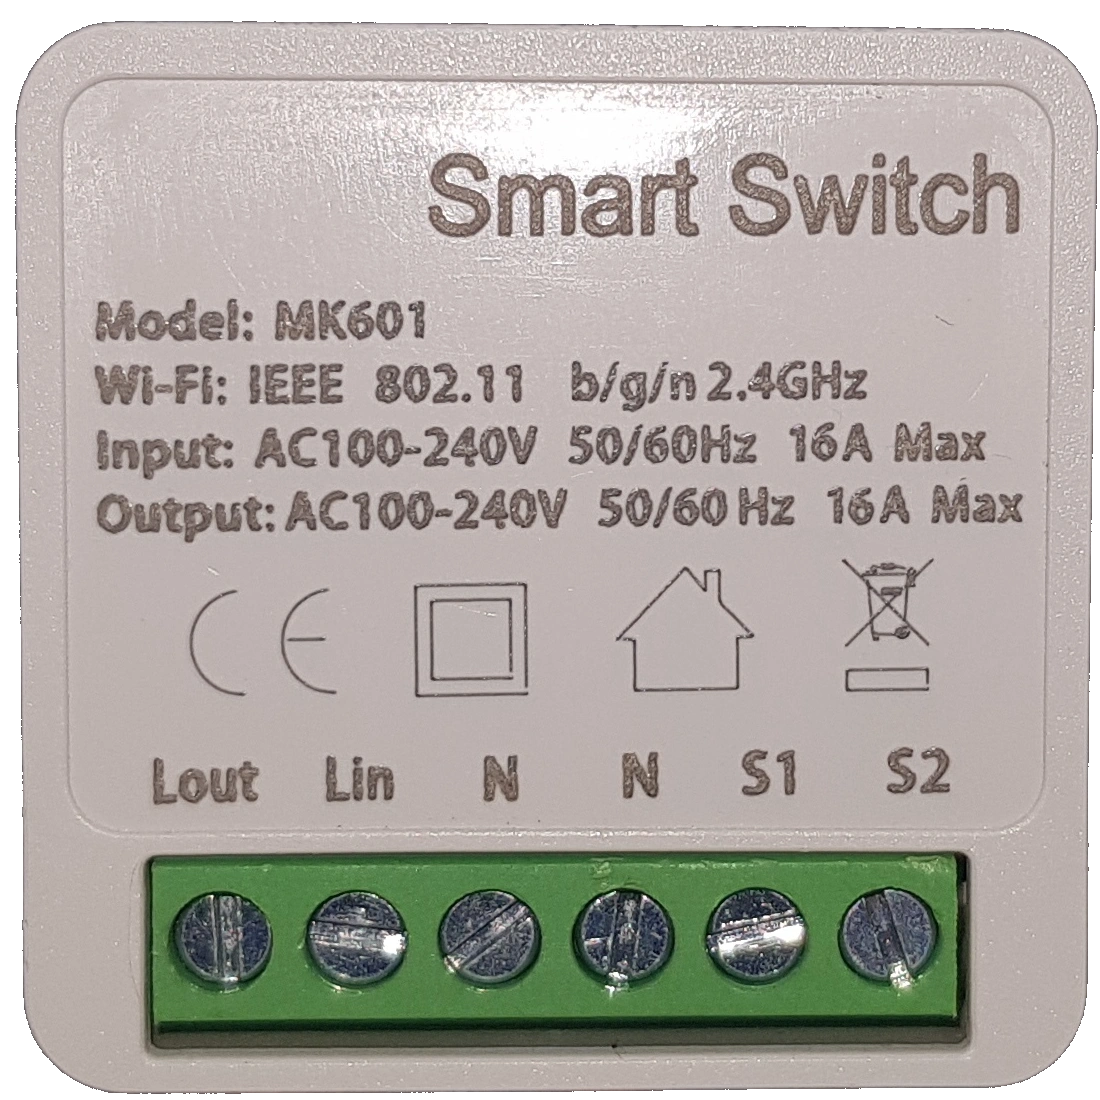 Mini Smart Switch